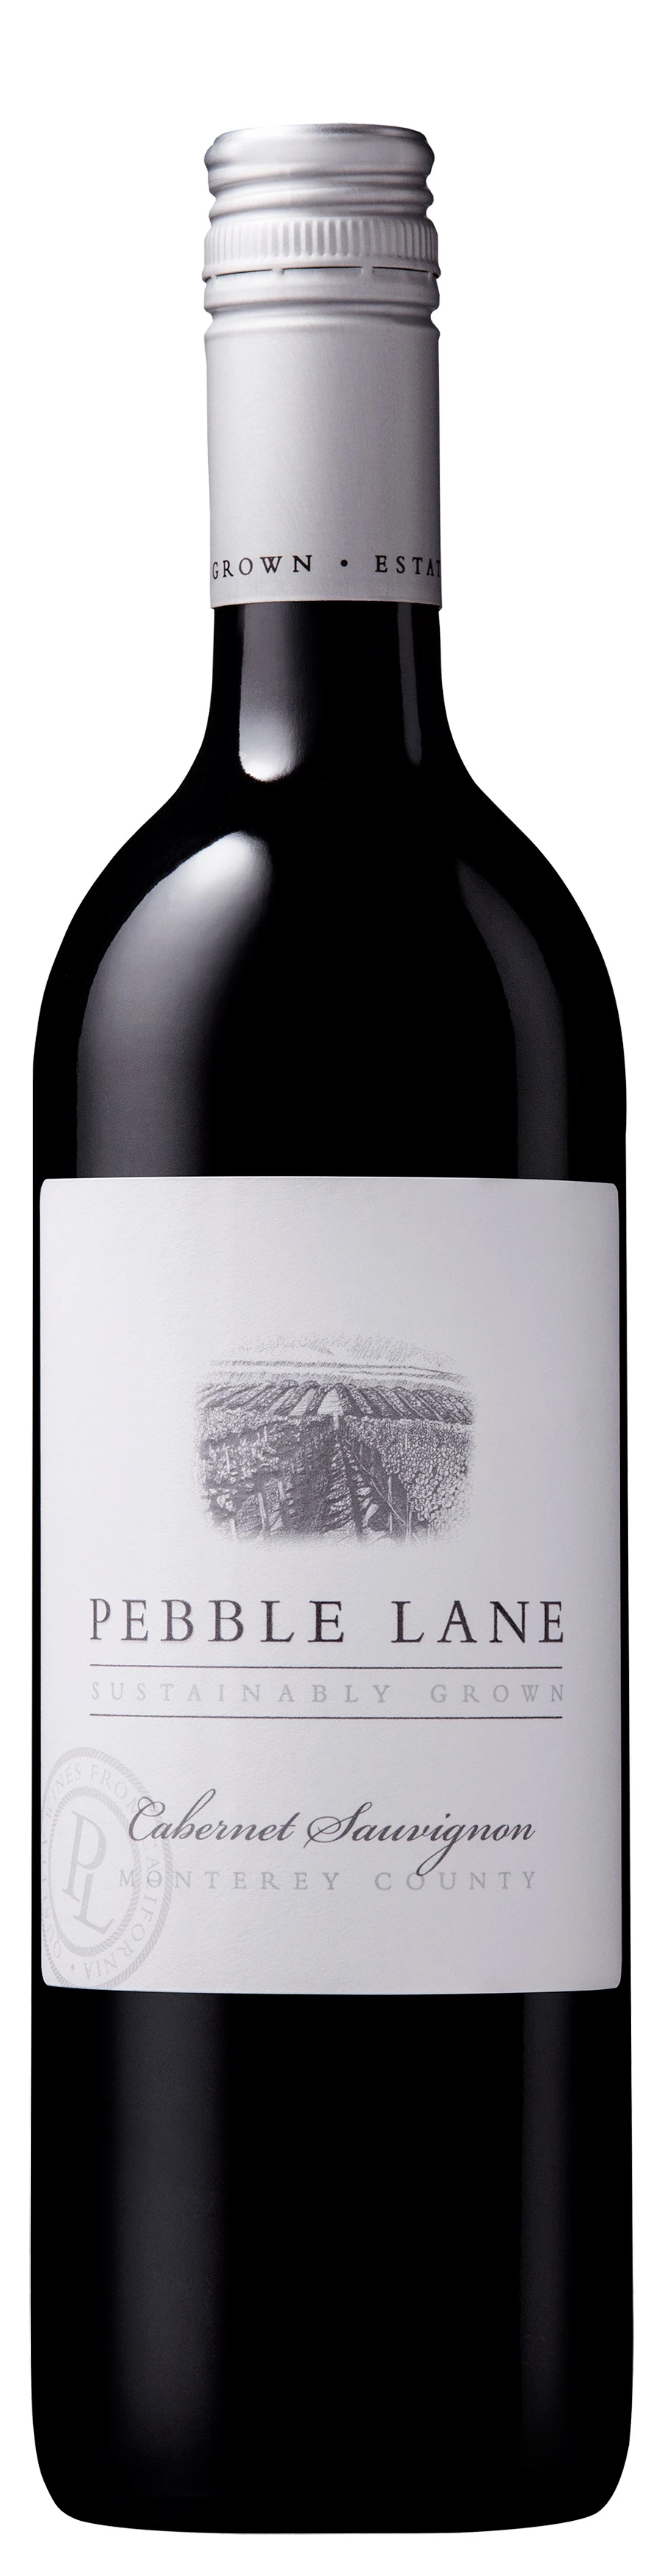 Pebble Lane | 鹅卵石庄园赤霞珠干红葡萄酒 2014 | Pebble Lane Cabernet Sauvignon 2014 (Monterey, CA),商家California Wine Experience,价格¥296